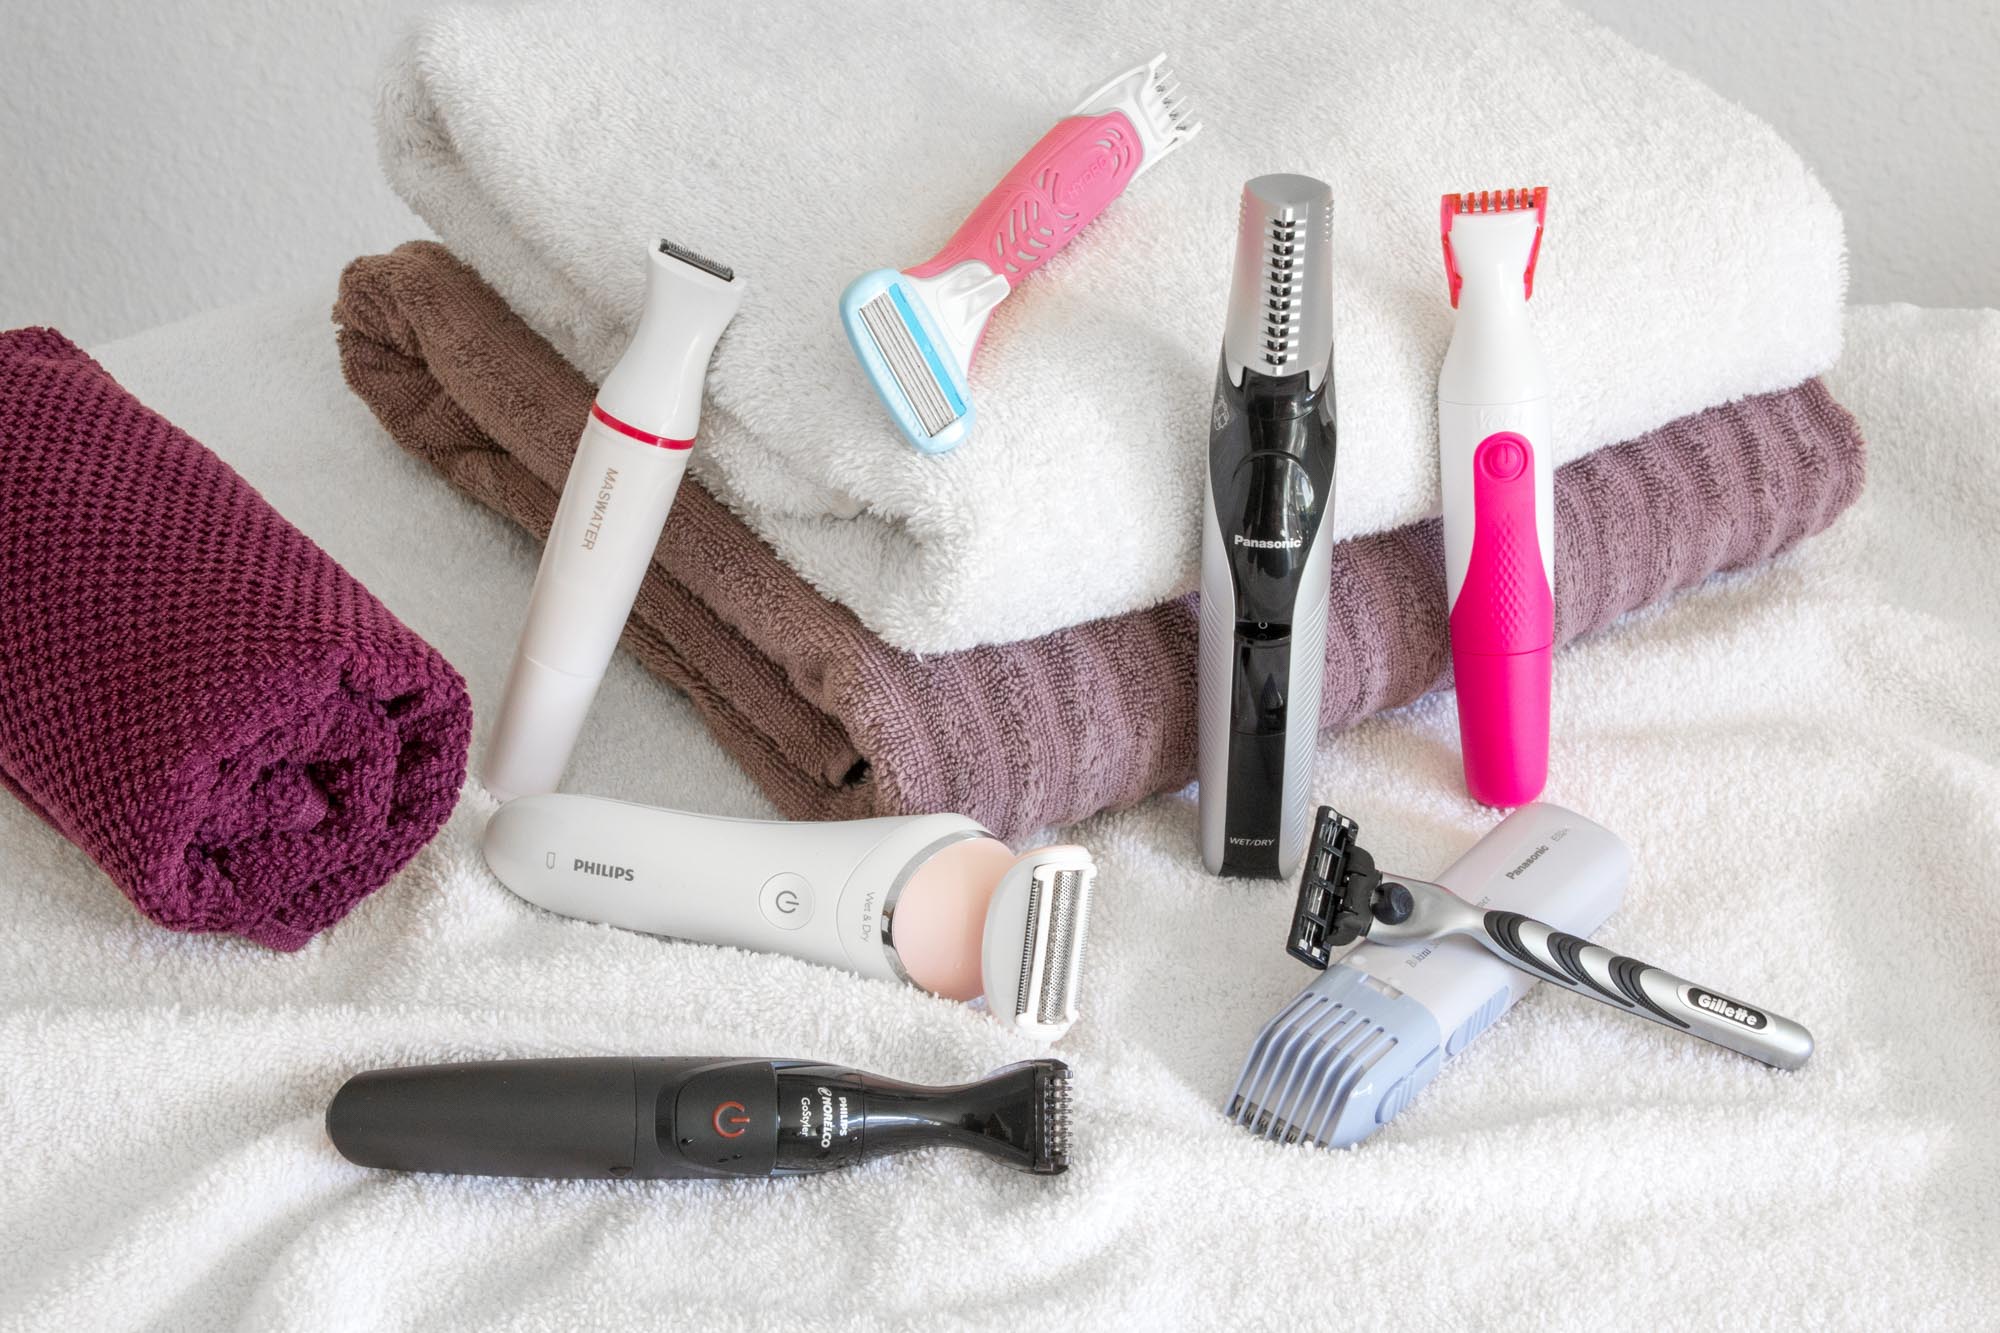 These bikini trimmers will help you achieve a super close shave